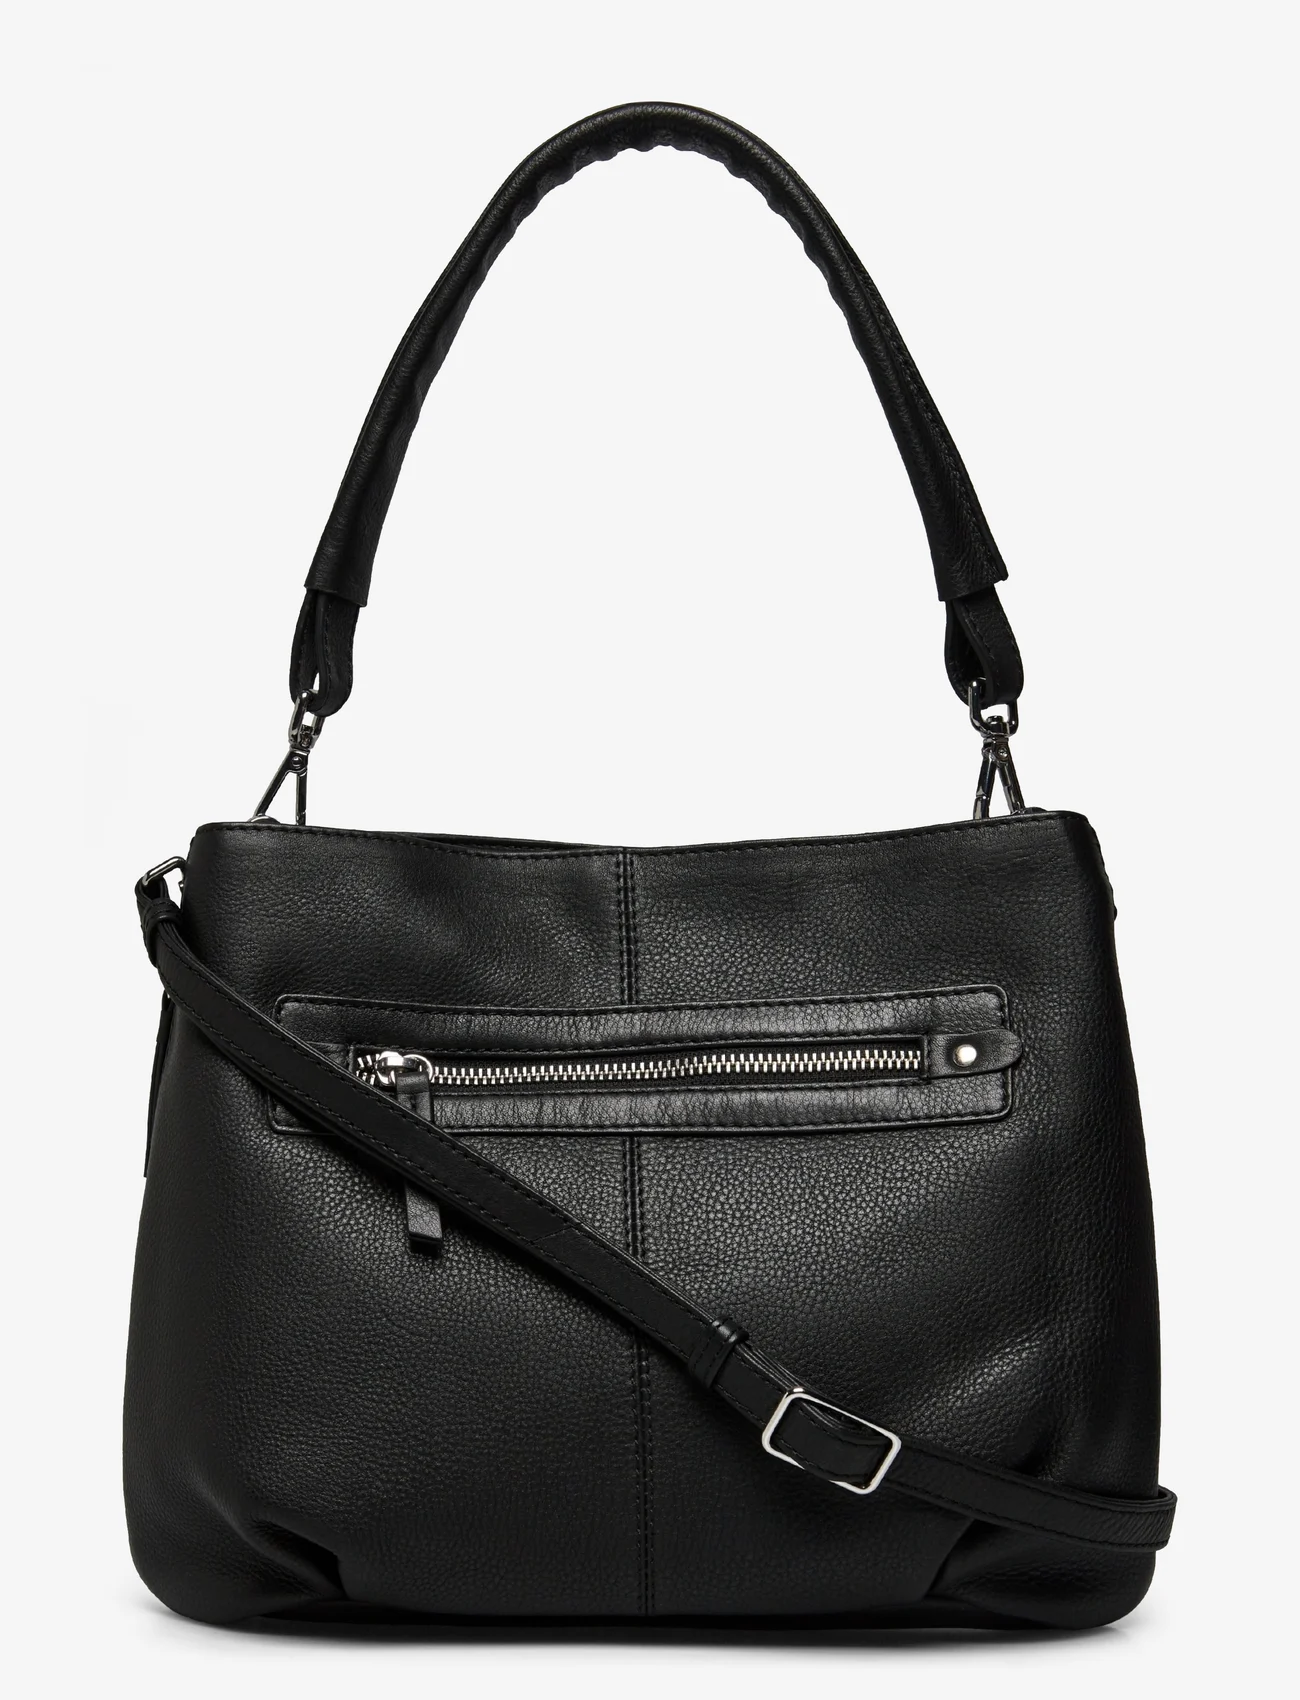 Markberg - DanaMBG Small Bag - feestelijke kleding voor outlet-prijzen - black - 0